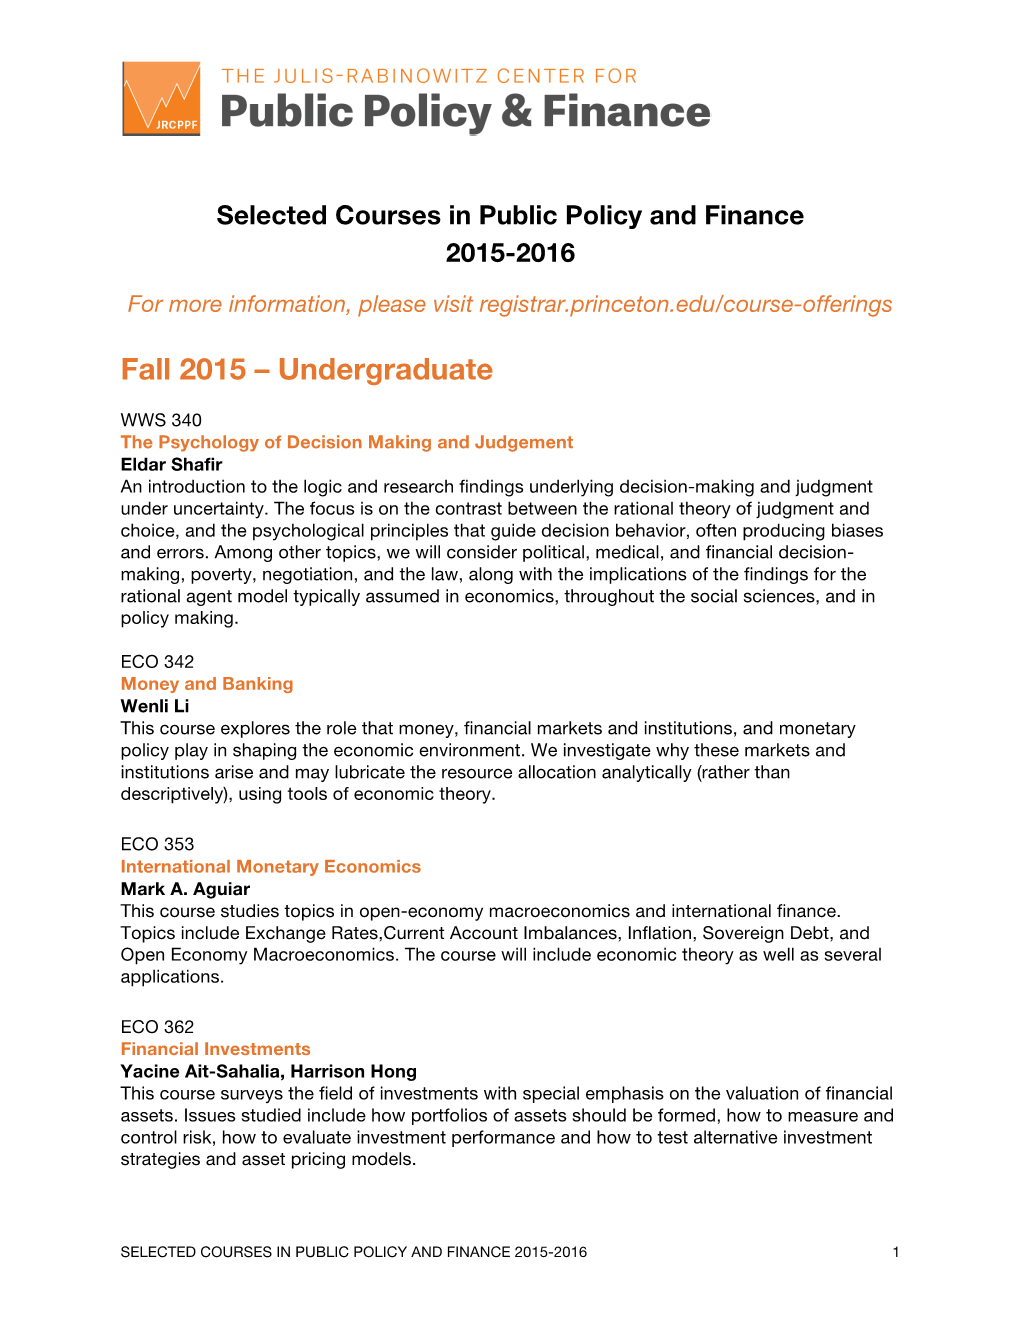 Fall 2015 – Undergraduate